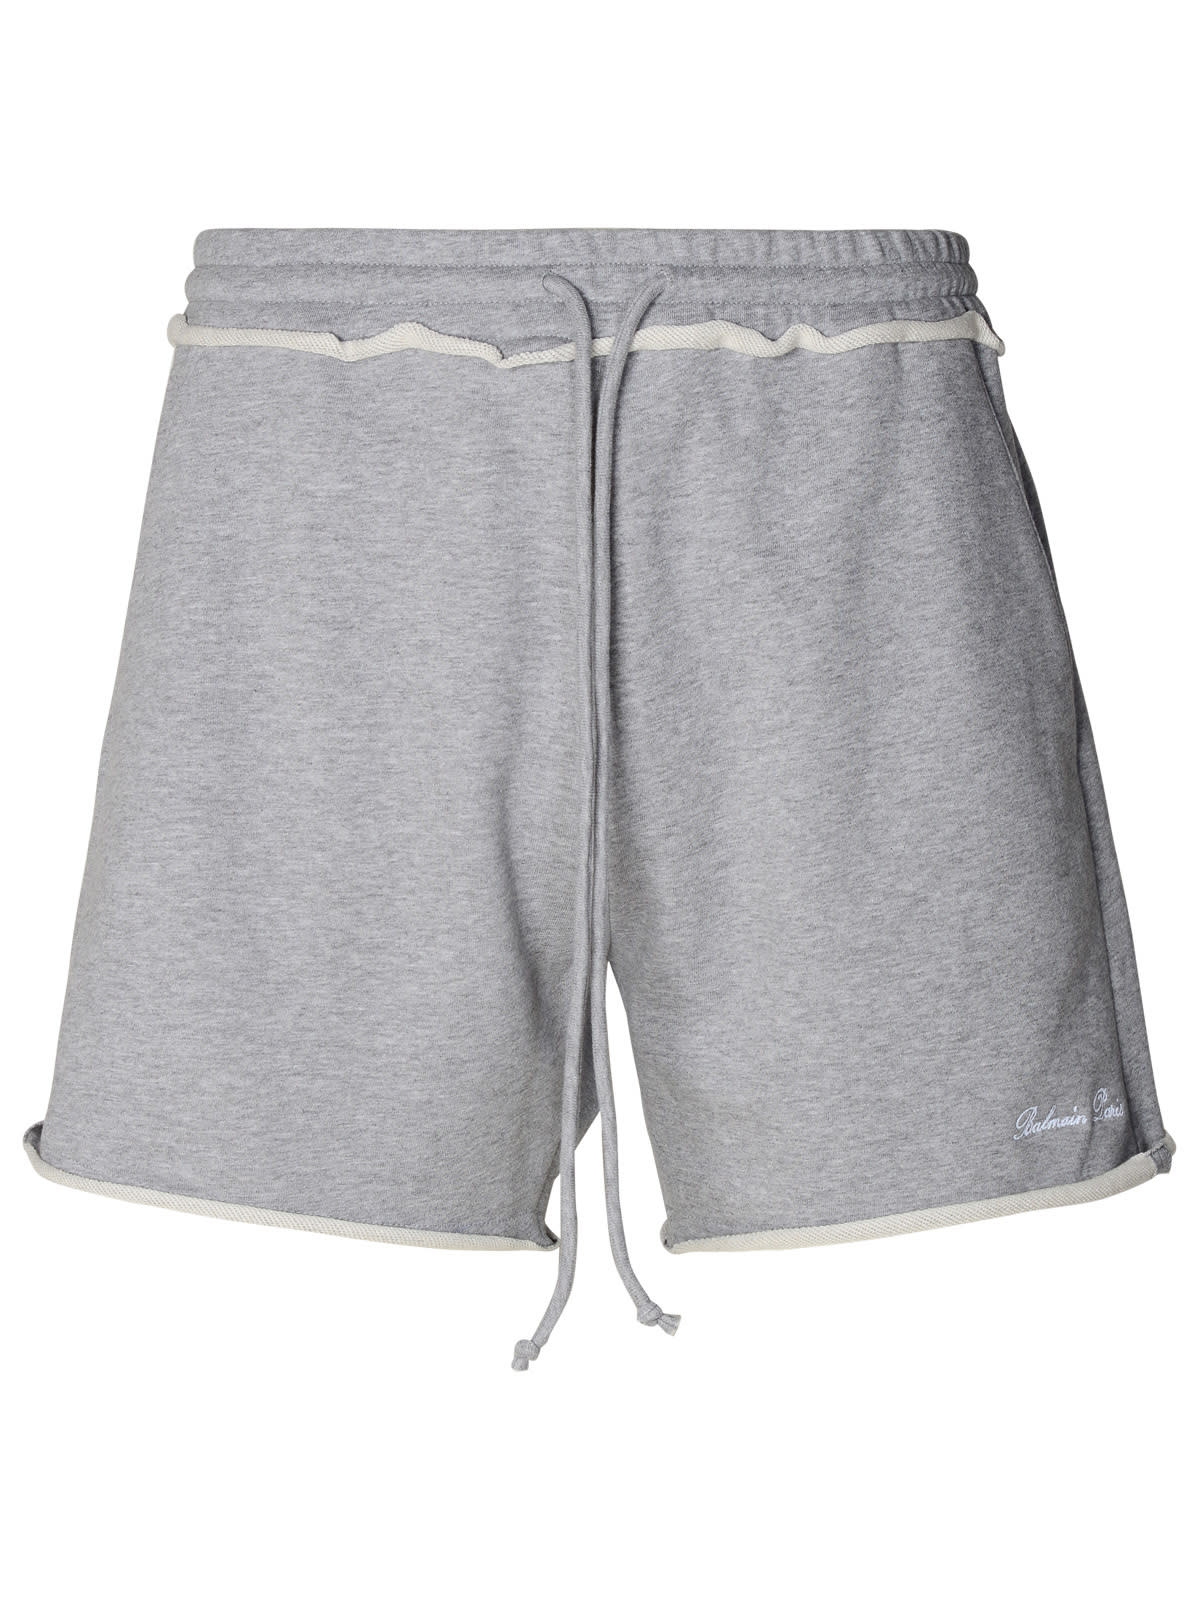 Balmain Grey Cotton Bermuda Shorts